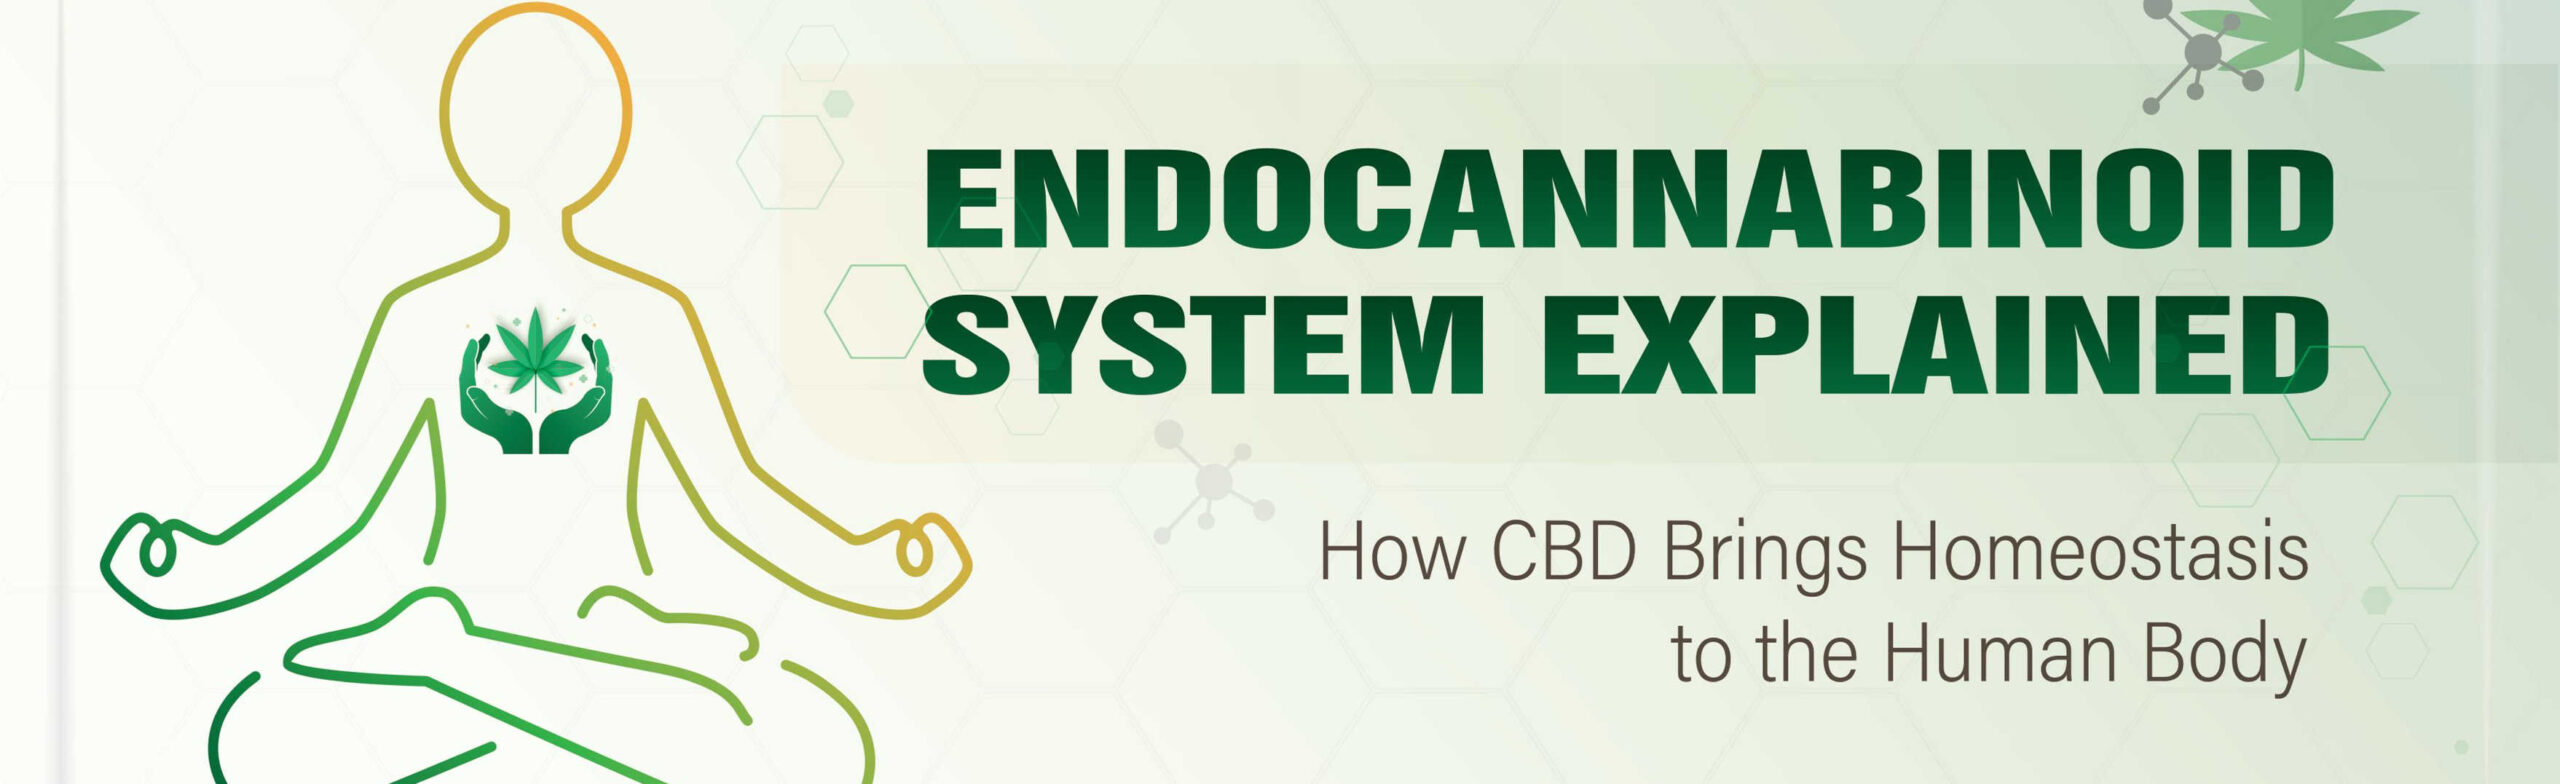 image of endocannabinoid systems